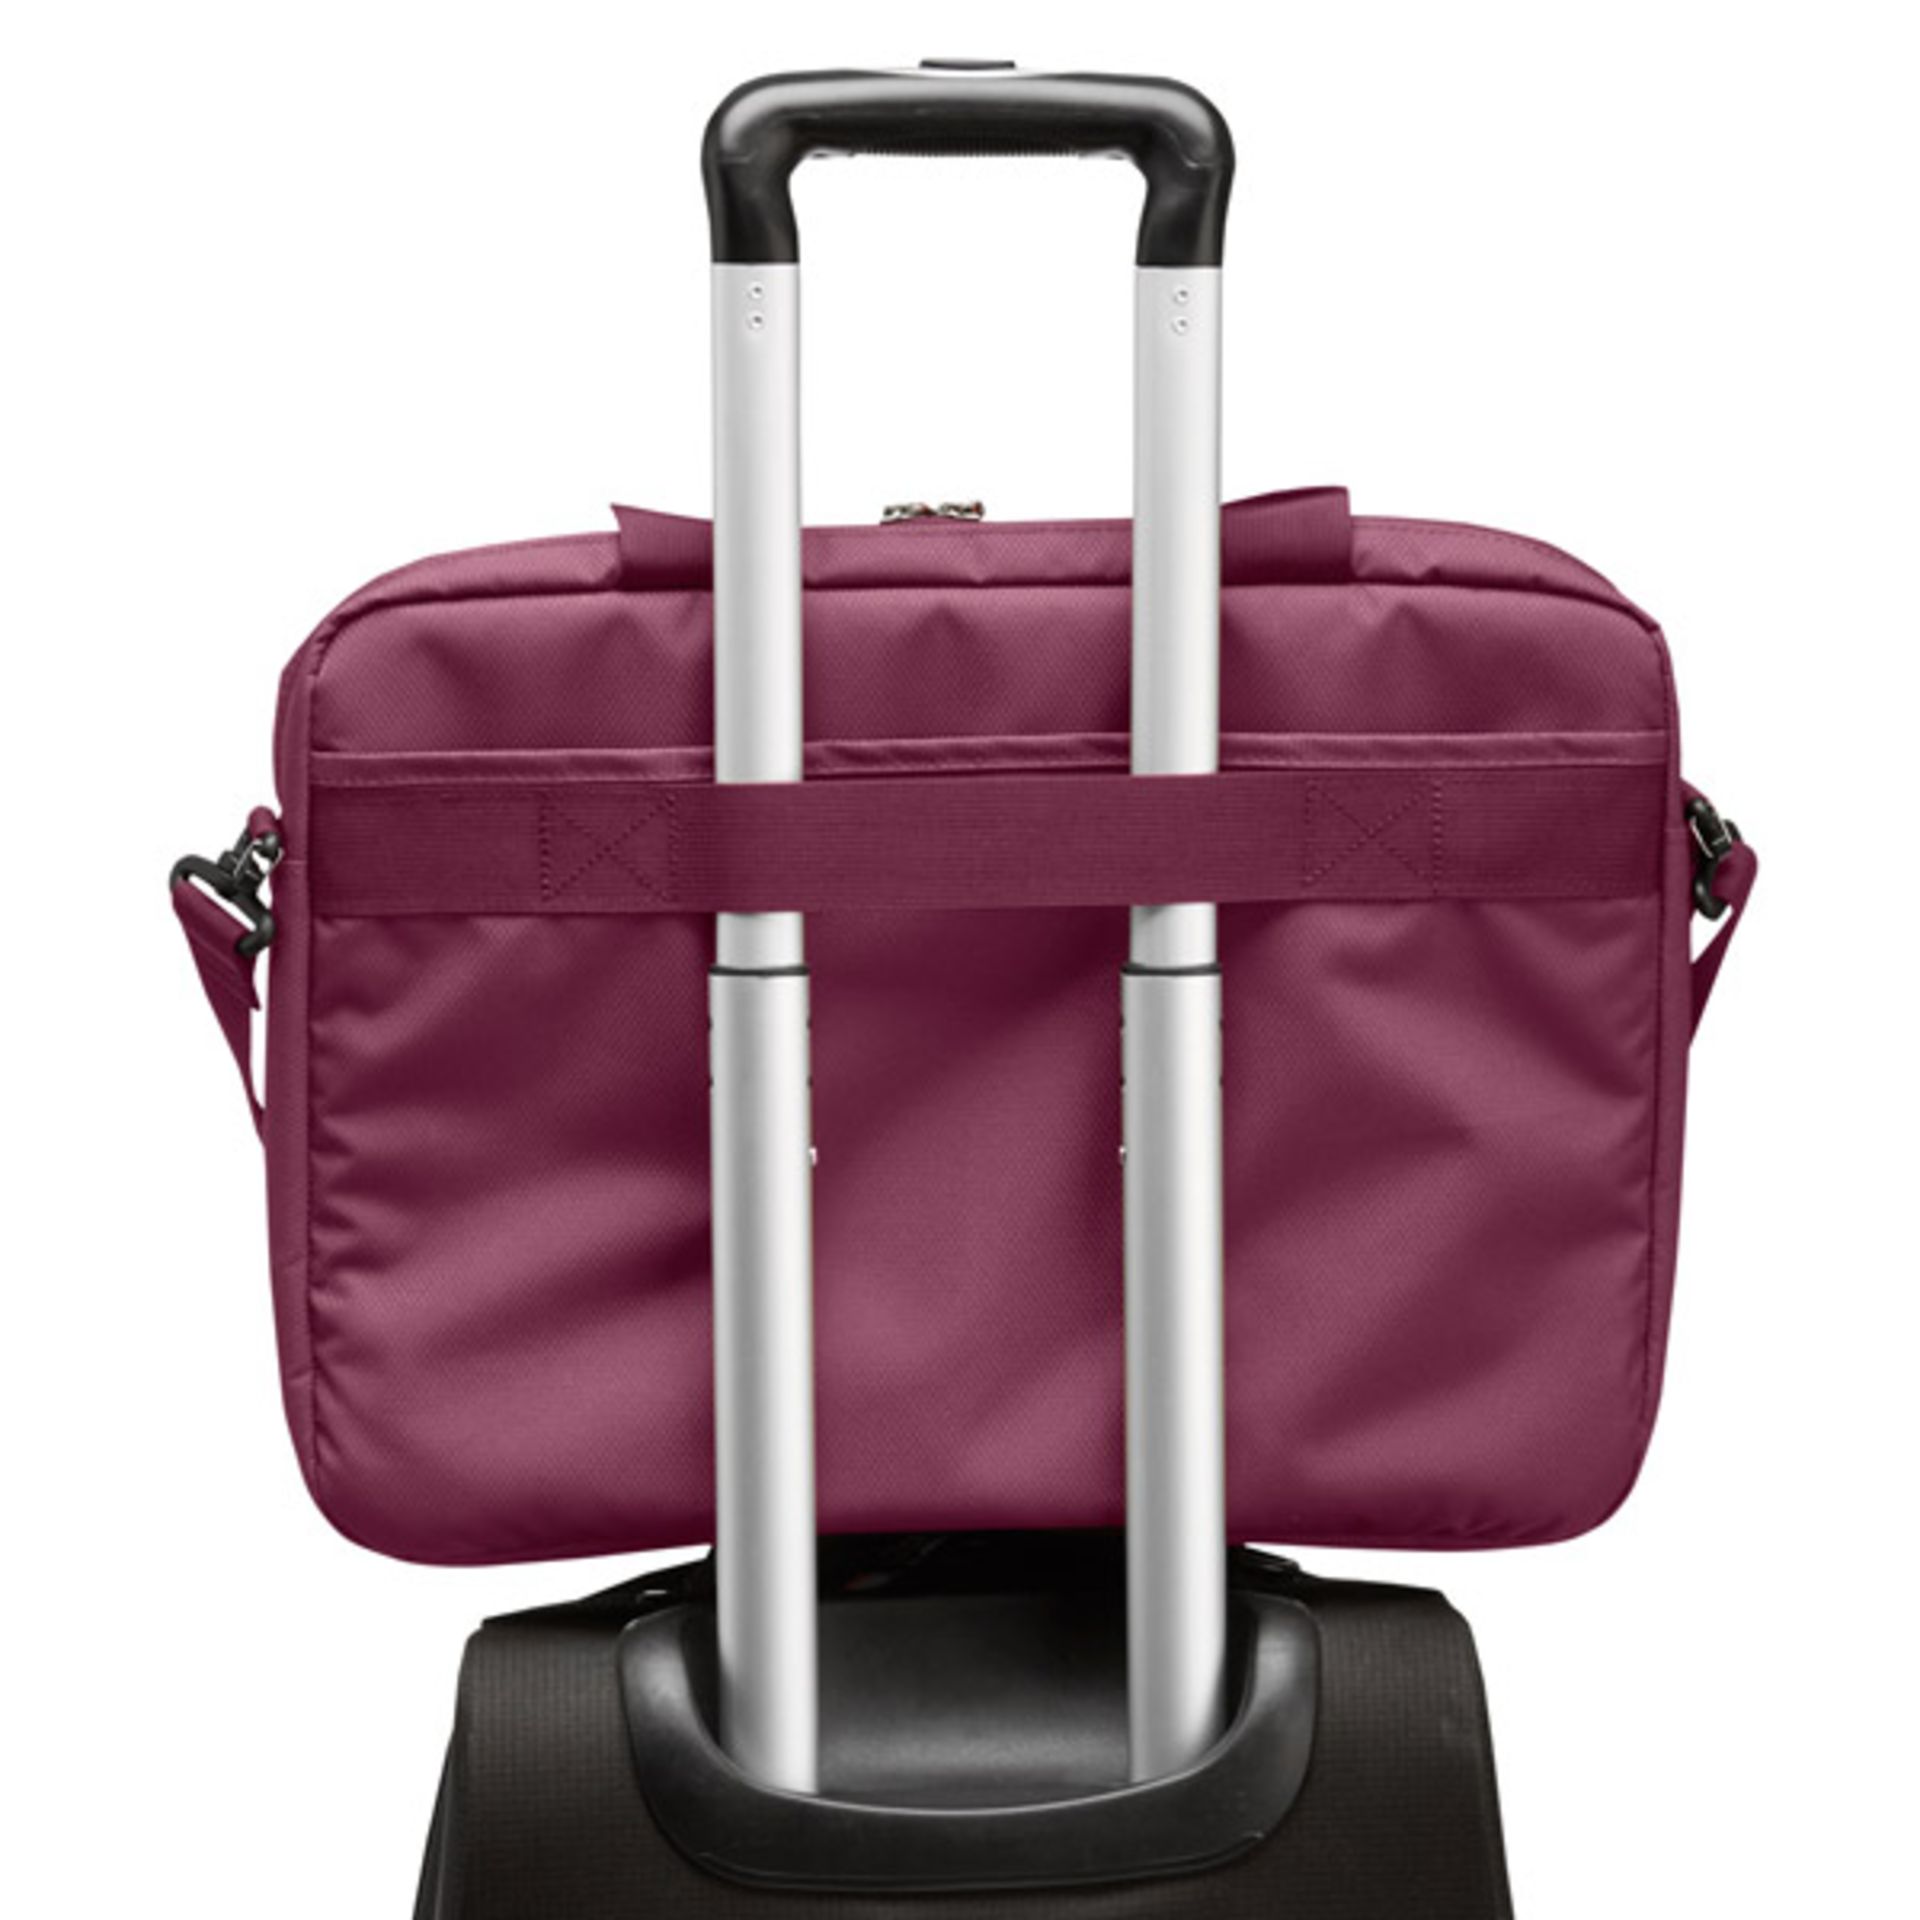 + VAT Brand New Medium Shoulder Bag - RRP Â£42.99 Amazon Price Â£33.57 - For Laptop/Tablet Up To - Image 2 of 3